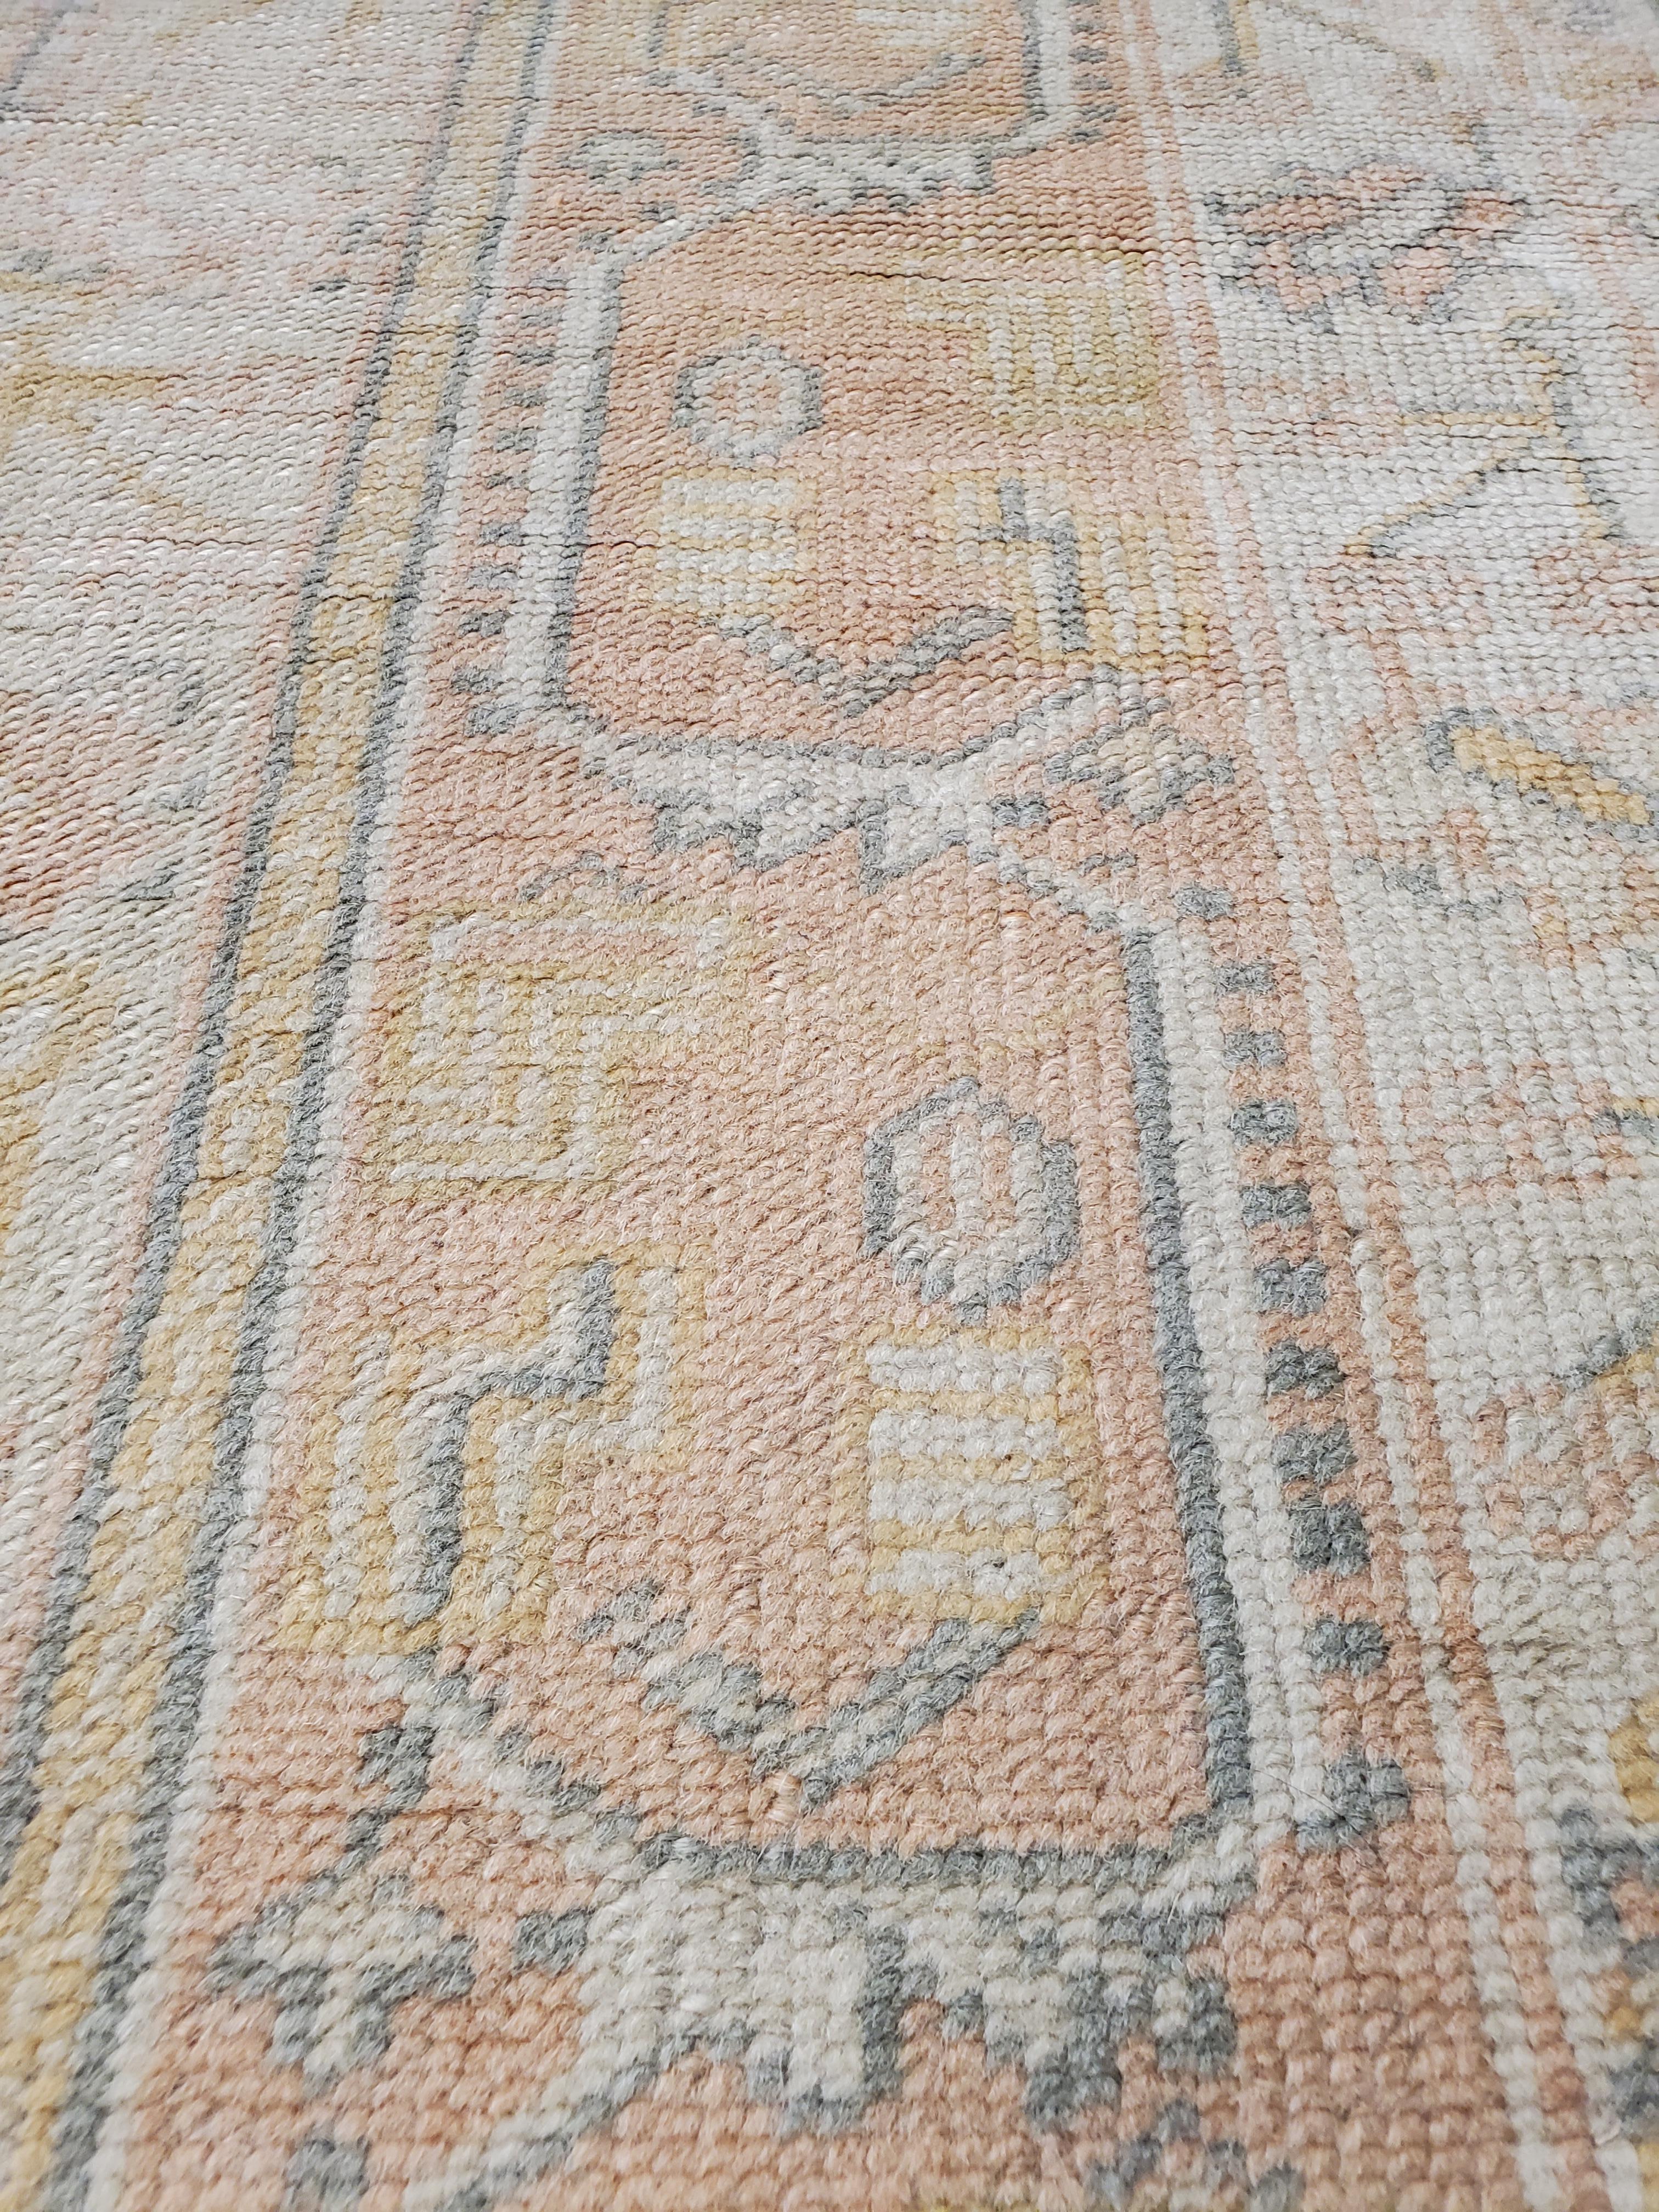 Antique Oushak Carpet, Turkish Rugs, Handmade Oriental Rugs, Pink Ivory Fine Rug For Sale 1